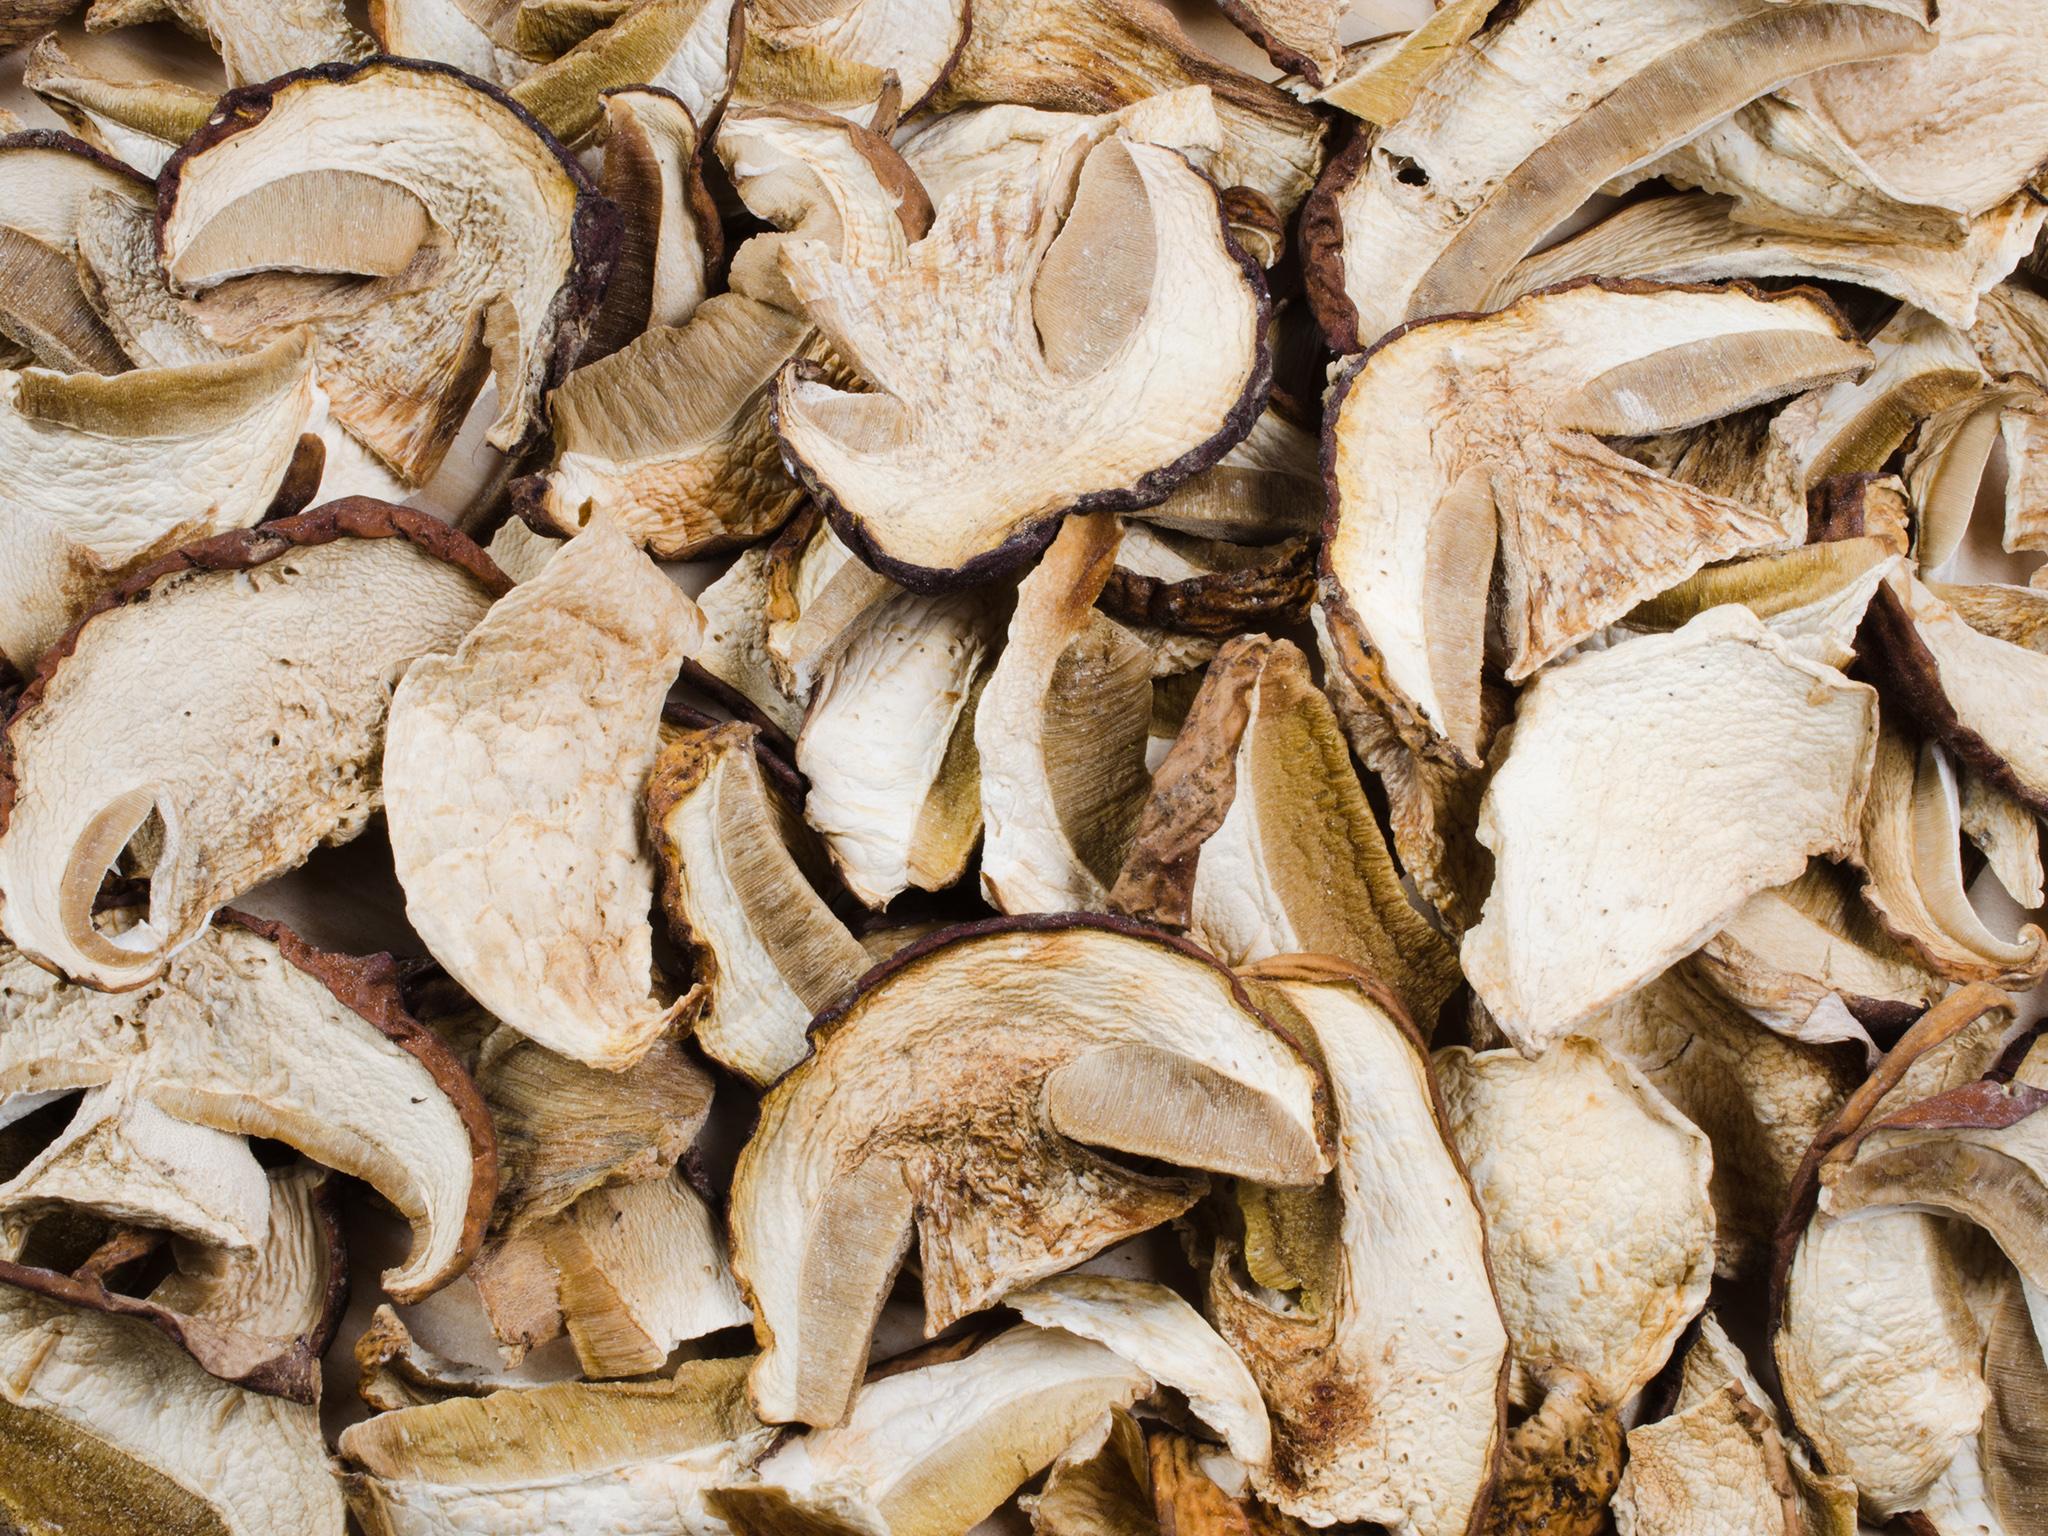 Porcini mushrooms contain fibre, vitamins B and C, calcium, potassium and other nutrients and antioxidants